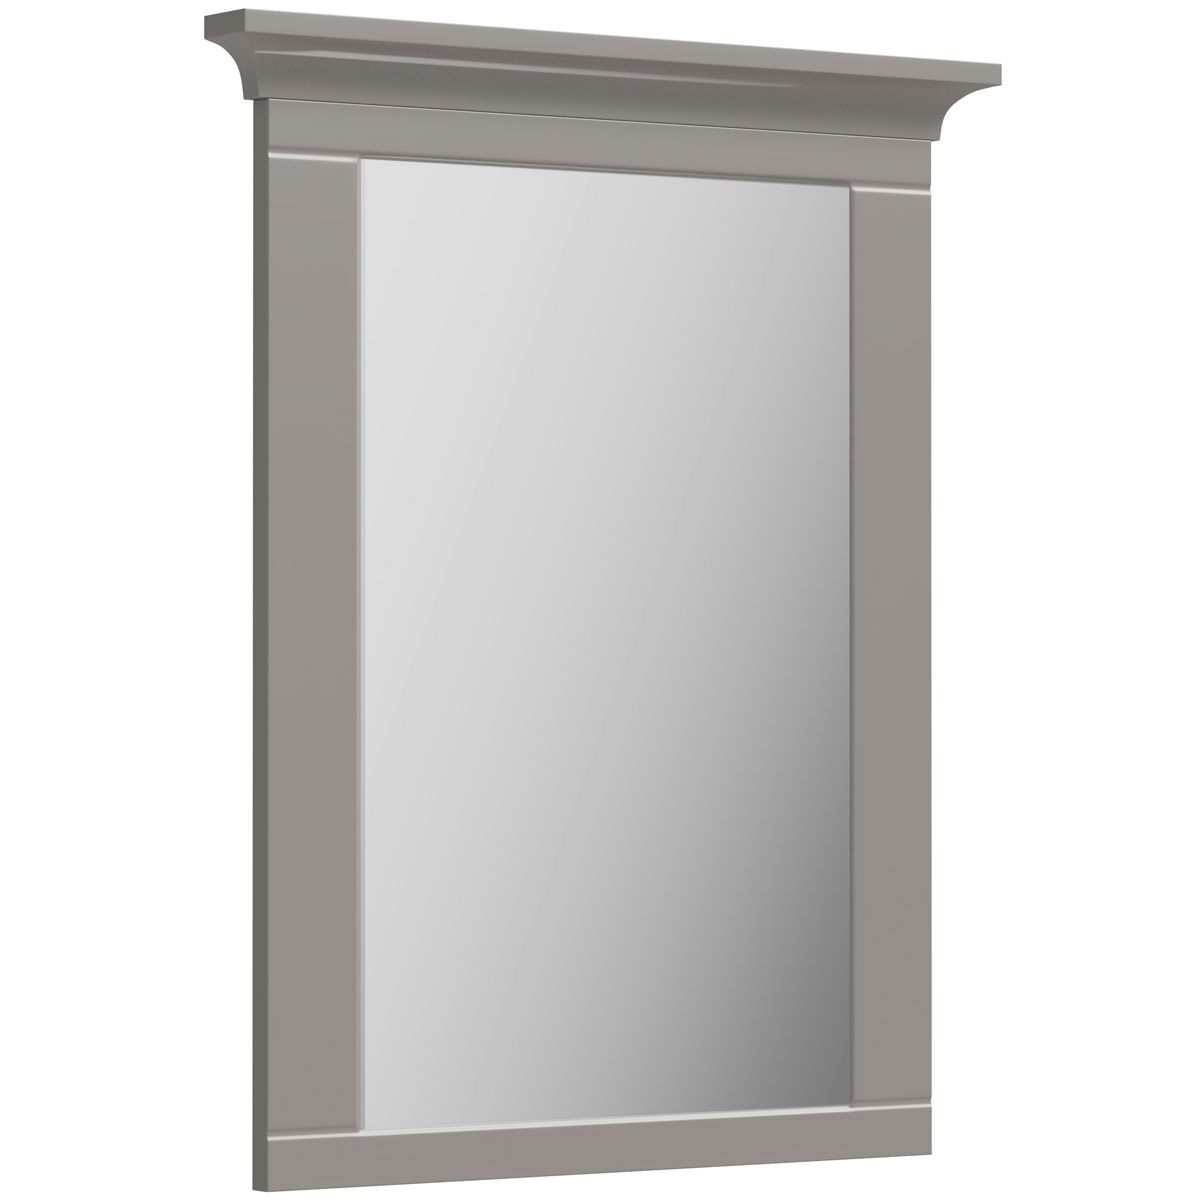 Orchard Winchester graphite grey bathroom mirror 750 x 600mm